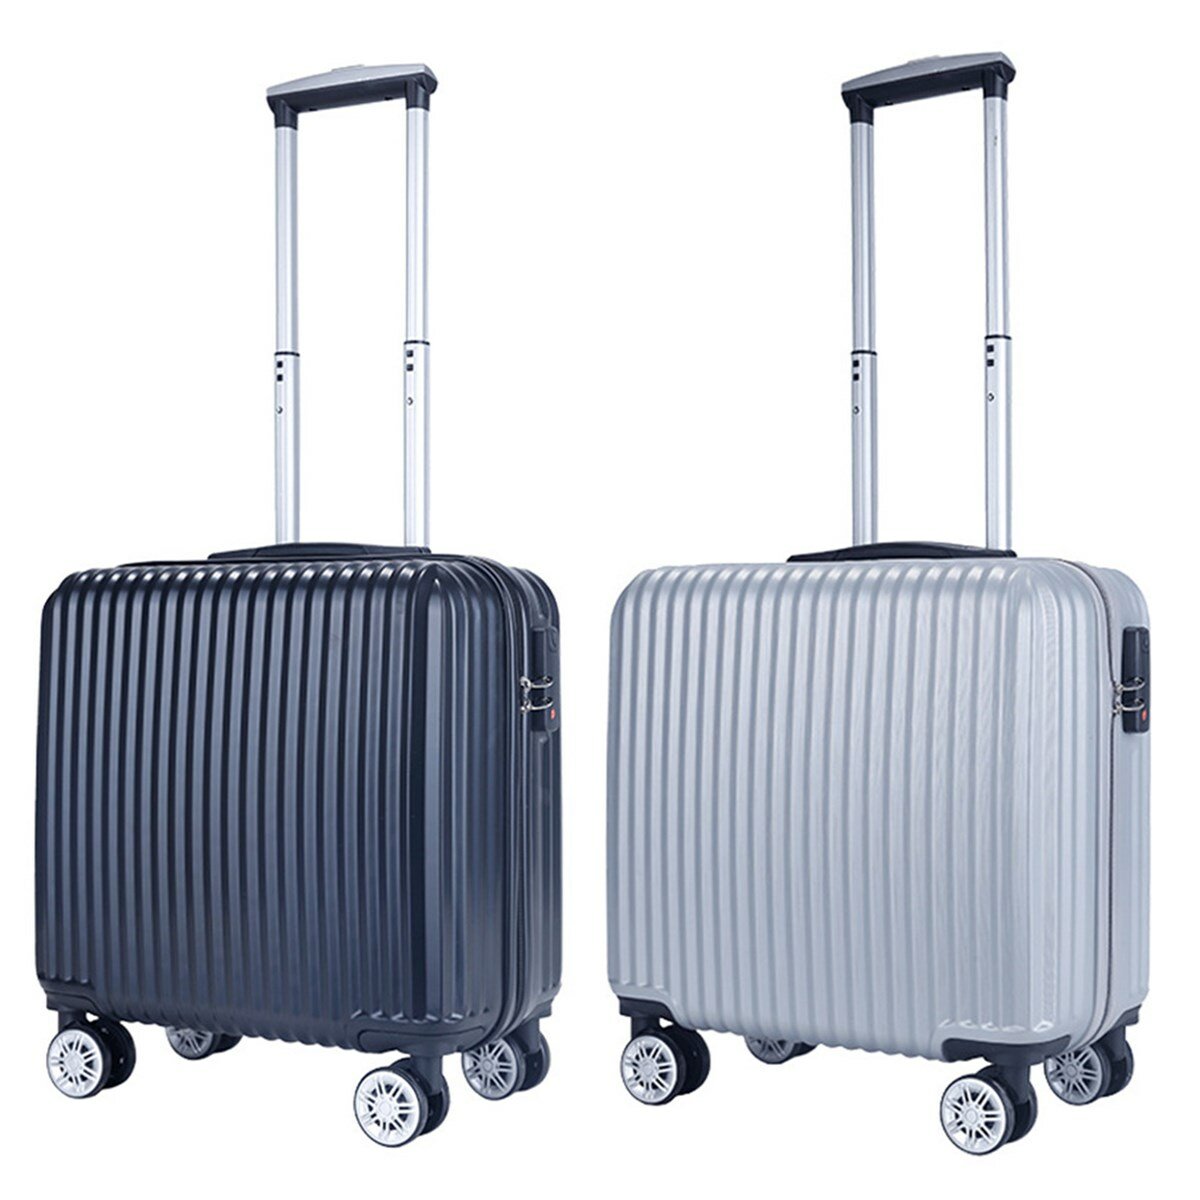 18inch Luggage Trolley Universal Mute Wheel Password Lock Travel Suitcase Fashion Aluminum Frame Trolley Box